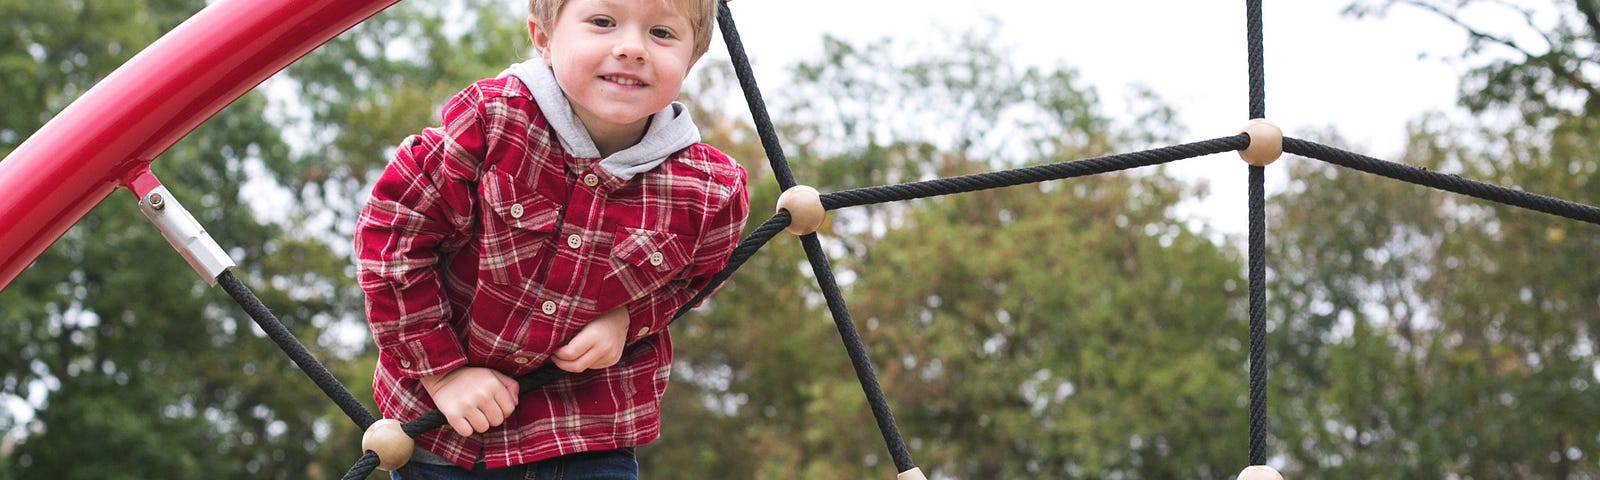 Young boy climbing on playground web